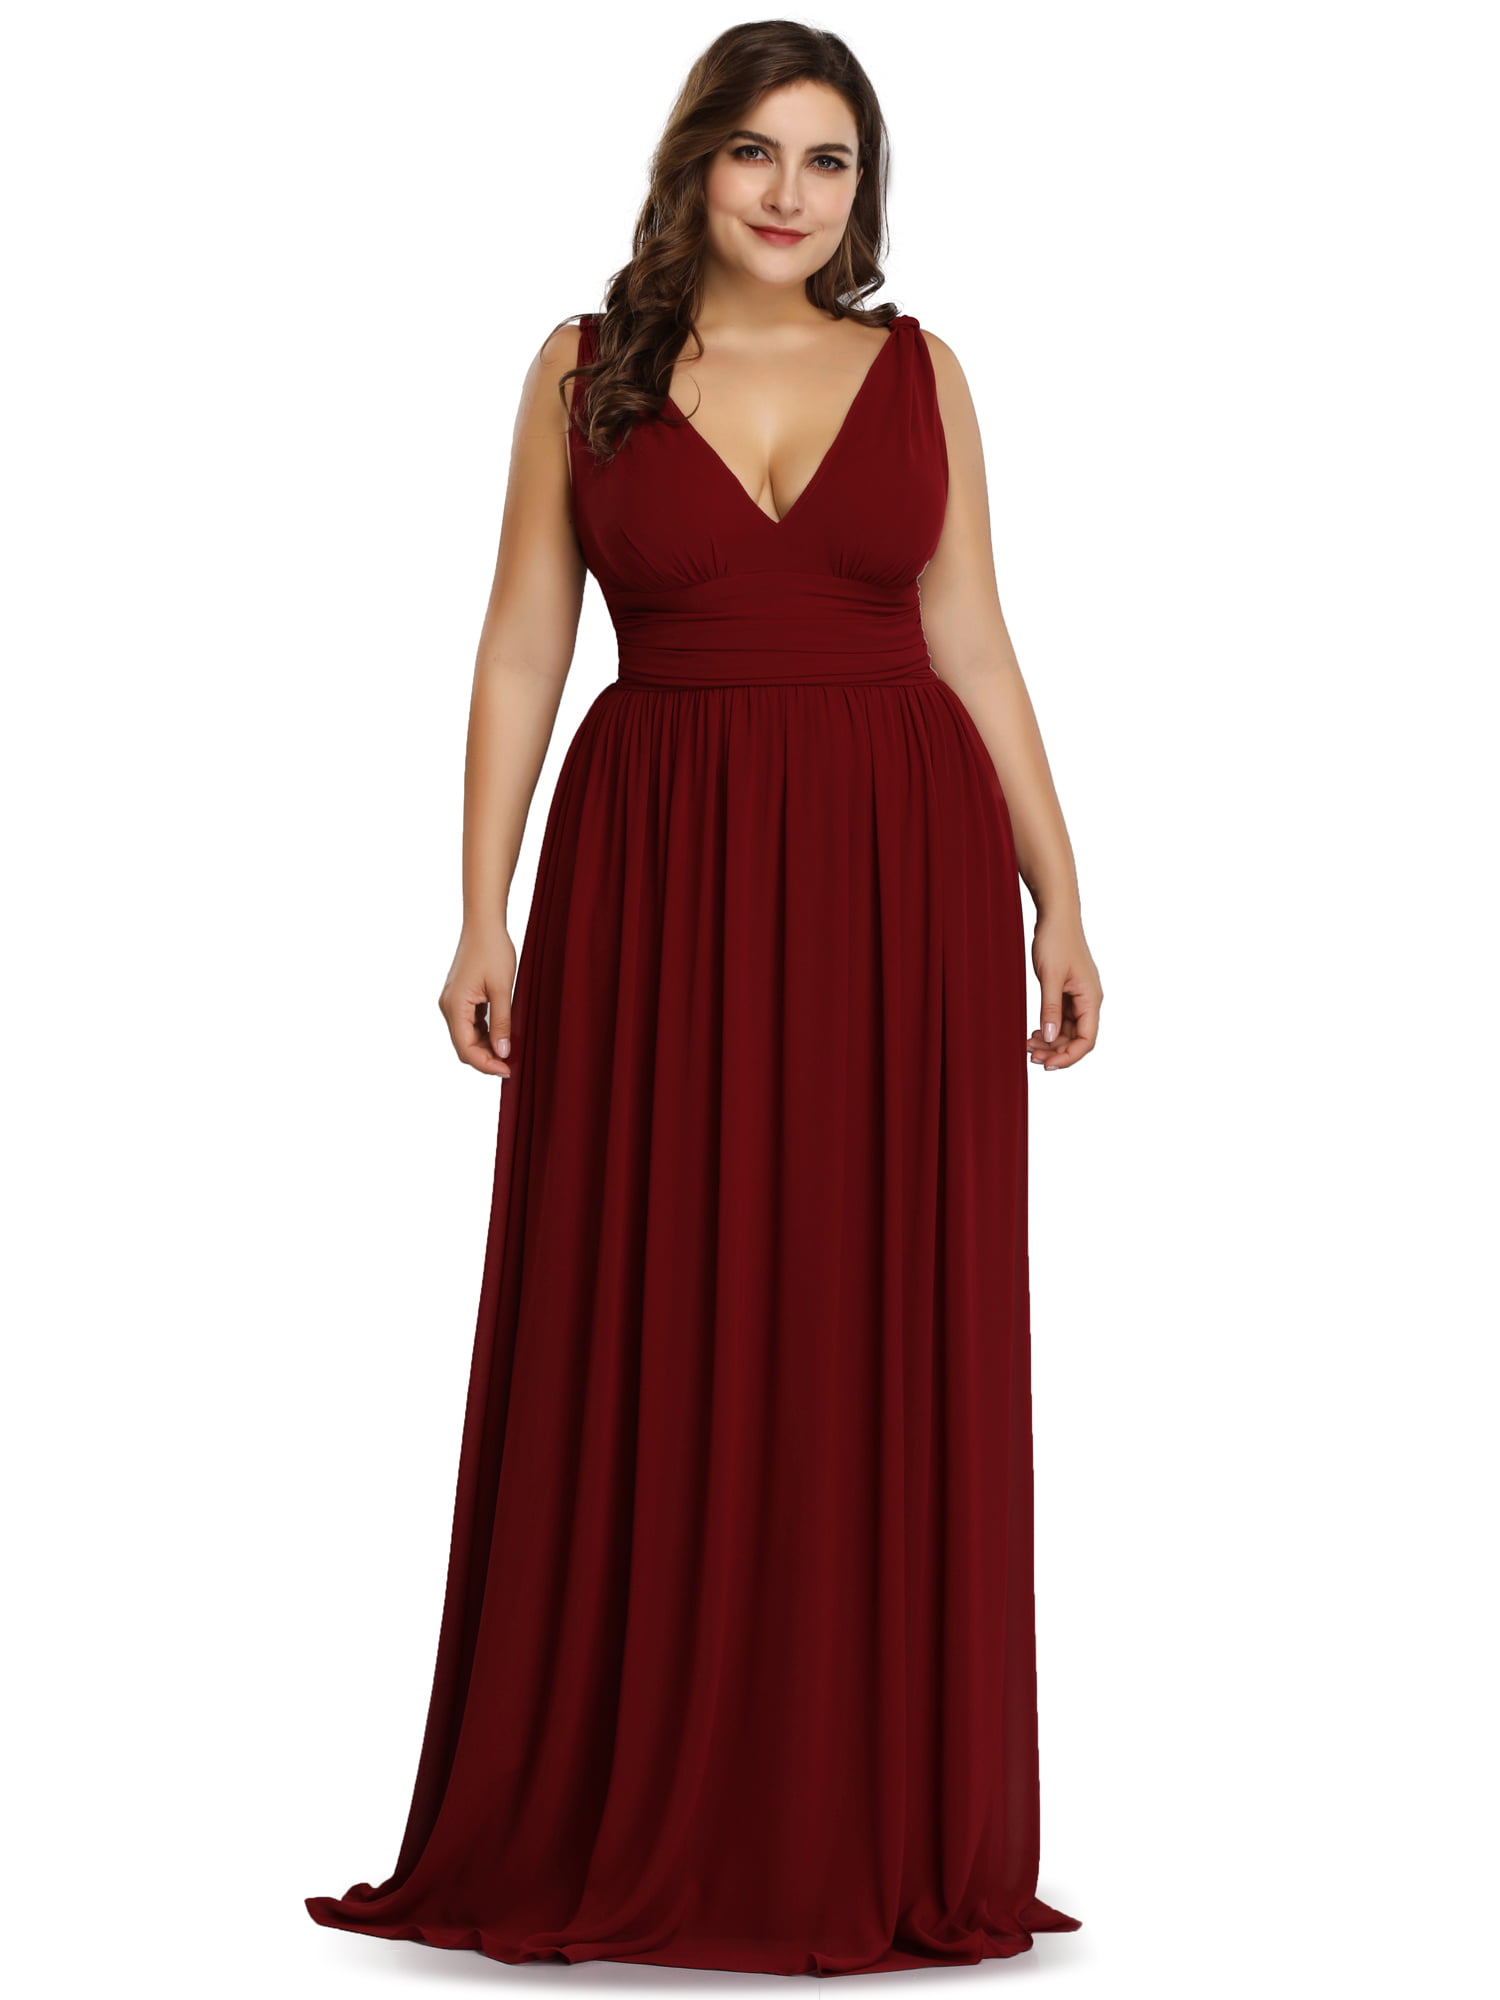 Ever-Pretty US Burgundy Plus Size Formal Gowns Applique Evening Party Dresses 